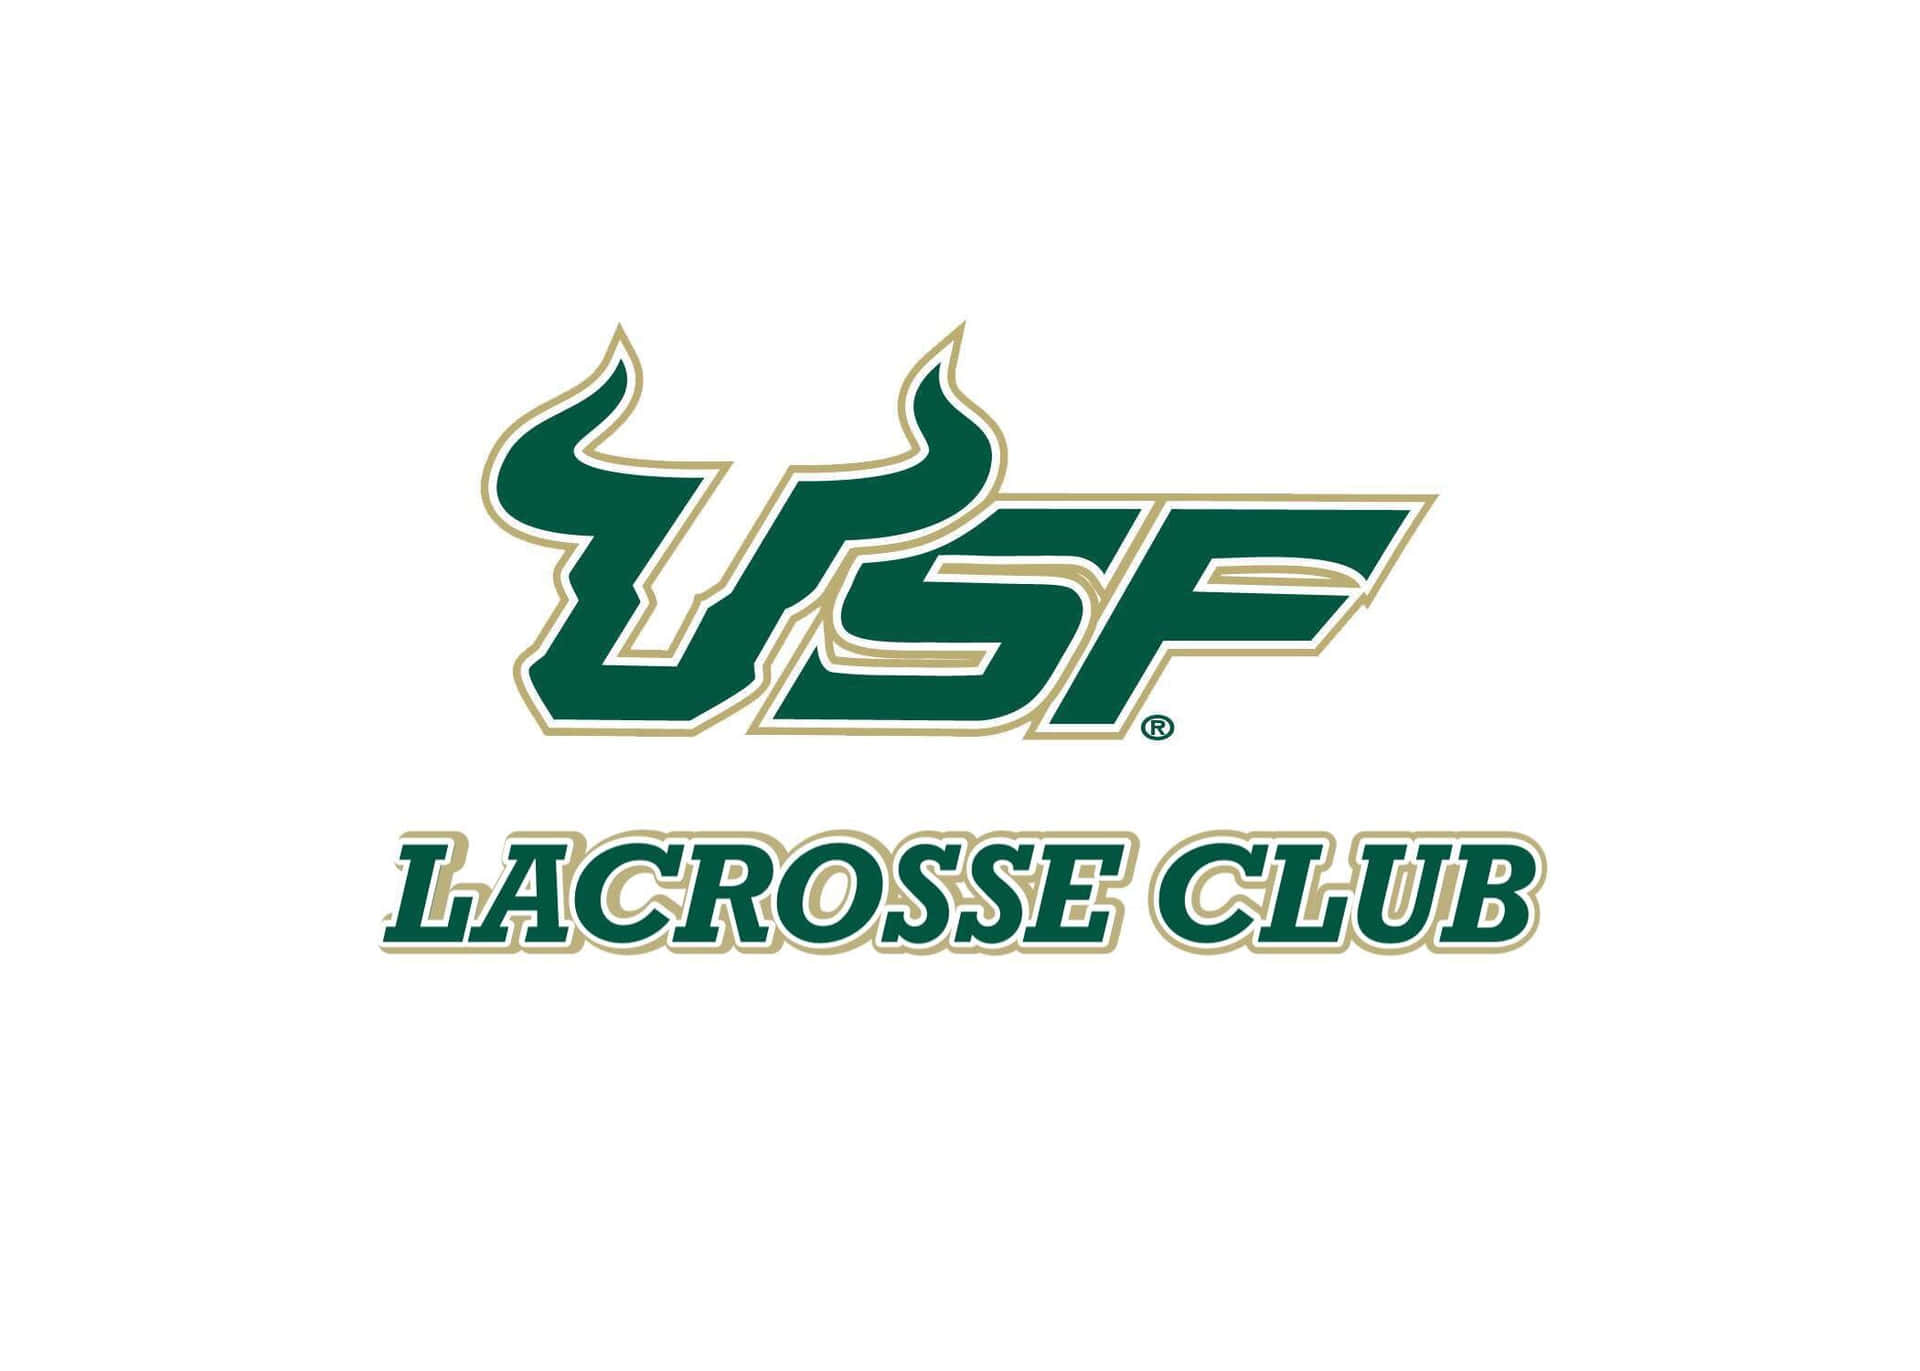 Logodes Lacrosse-clubs Der University Of South Florida Wallpaper